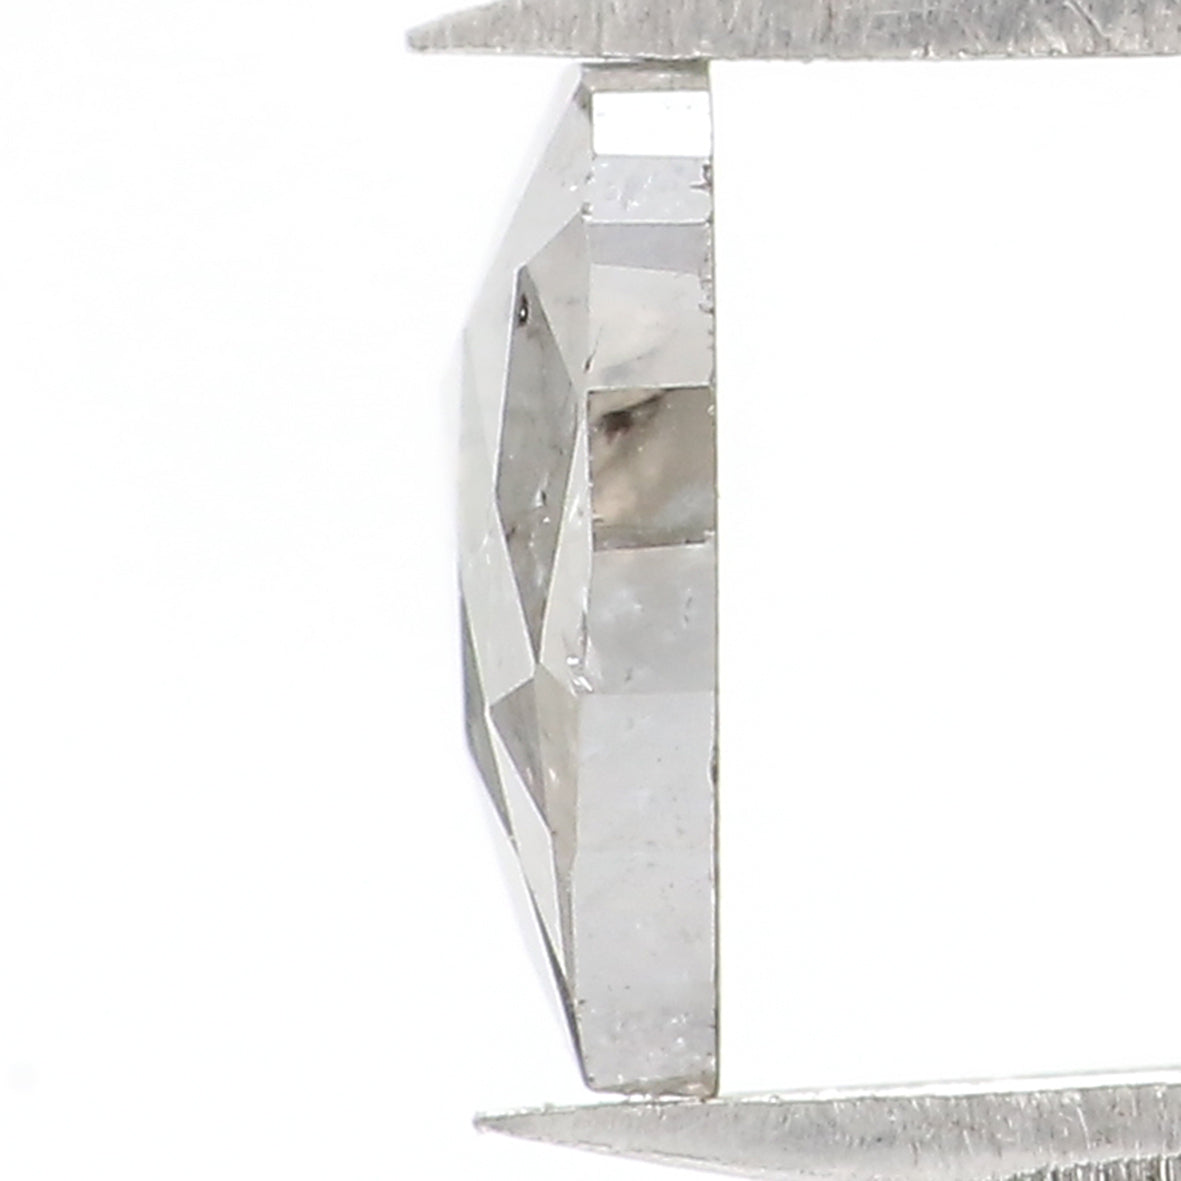 Natural Loose Heart Salt And Papper Diamond Black Grey Color 0.65 CT 6.65 MM Heart Shape Rose Cut KDL1627